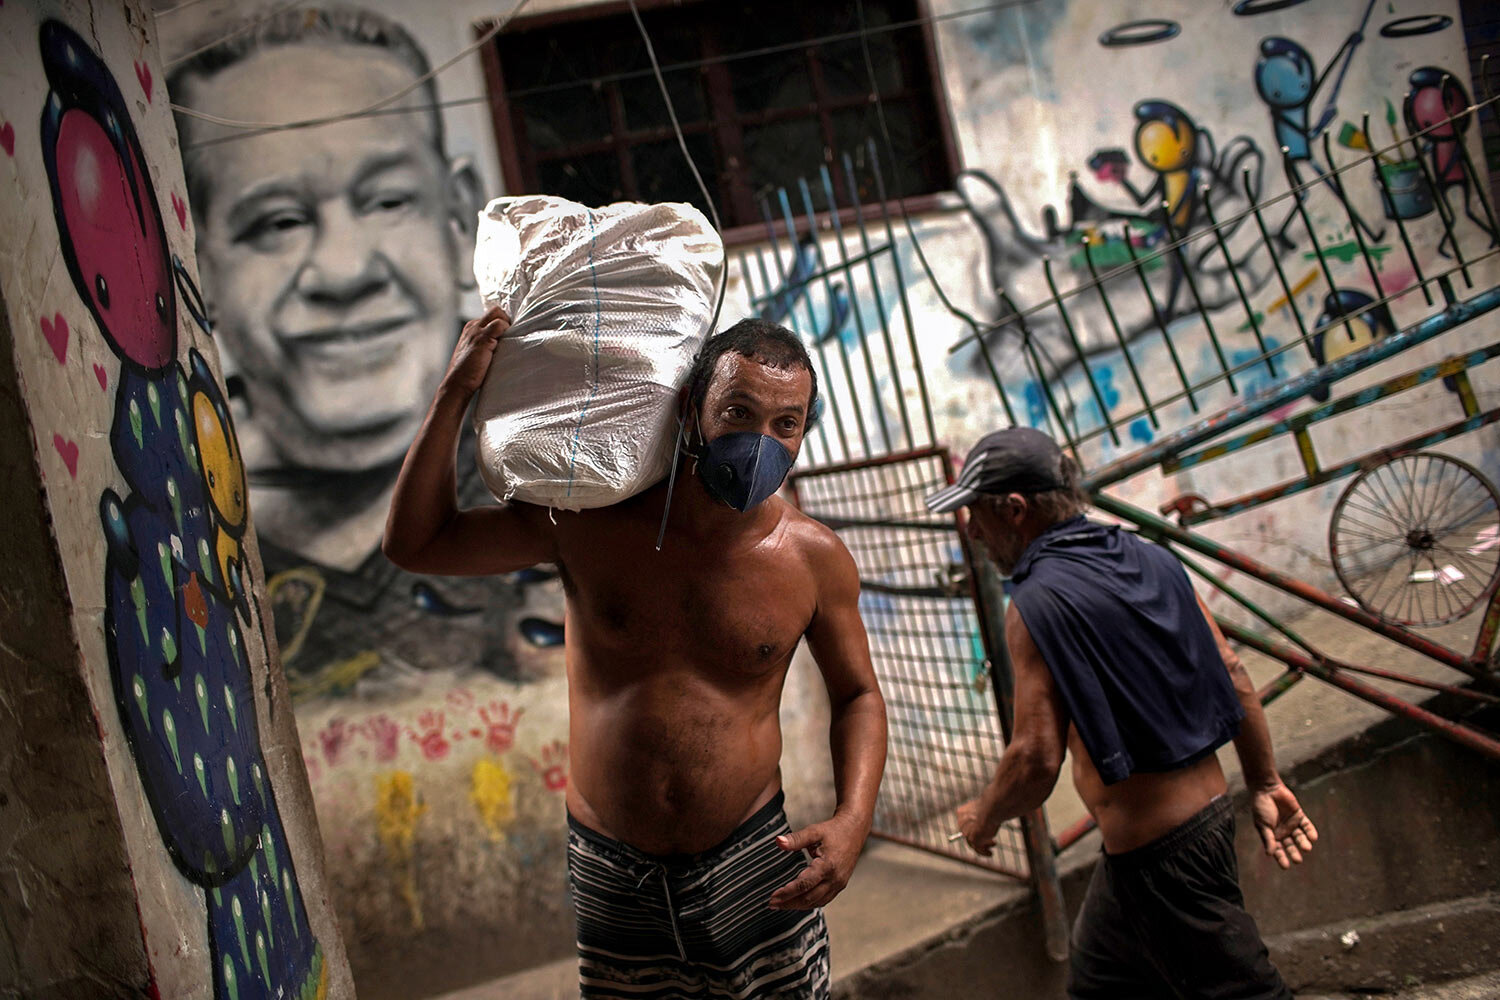  A man carries a bag as he uses a face mask as a precaution against the spread of the new coronavirus in the Rocinha slum of Rio de Janeiro, Brazil, March 20, 2020. (AP Photo/Silvia Izquierdo) 